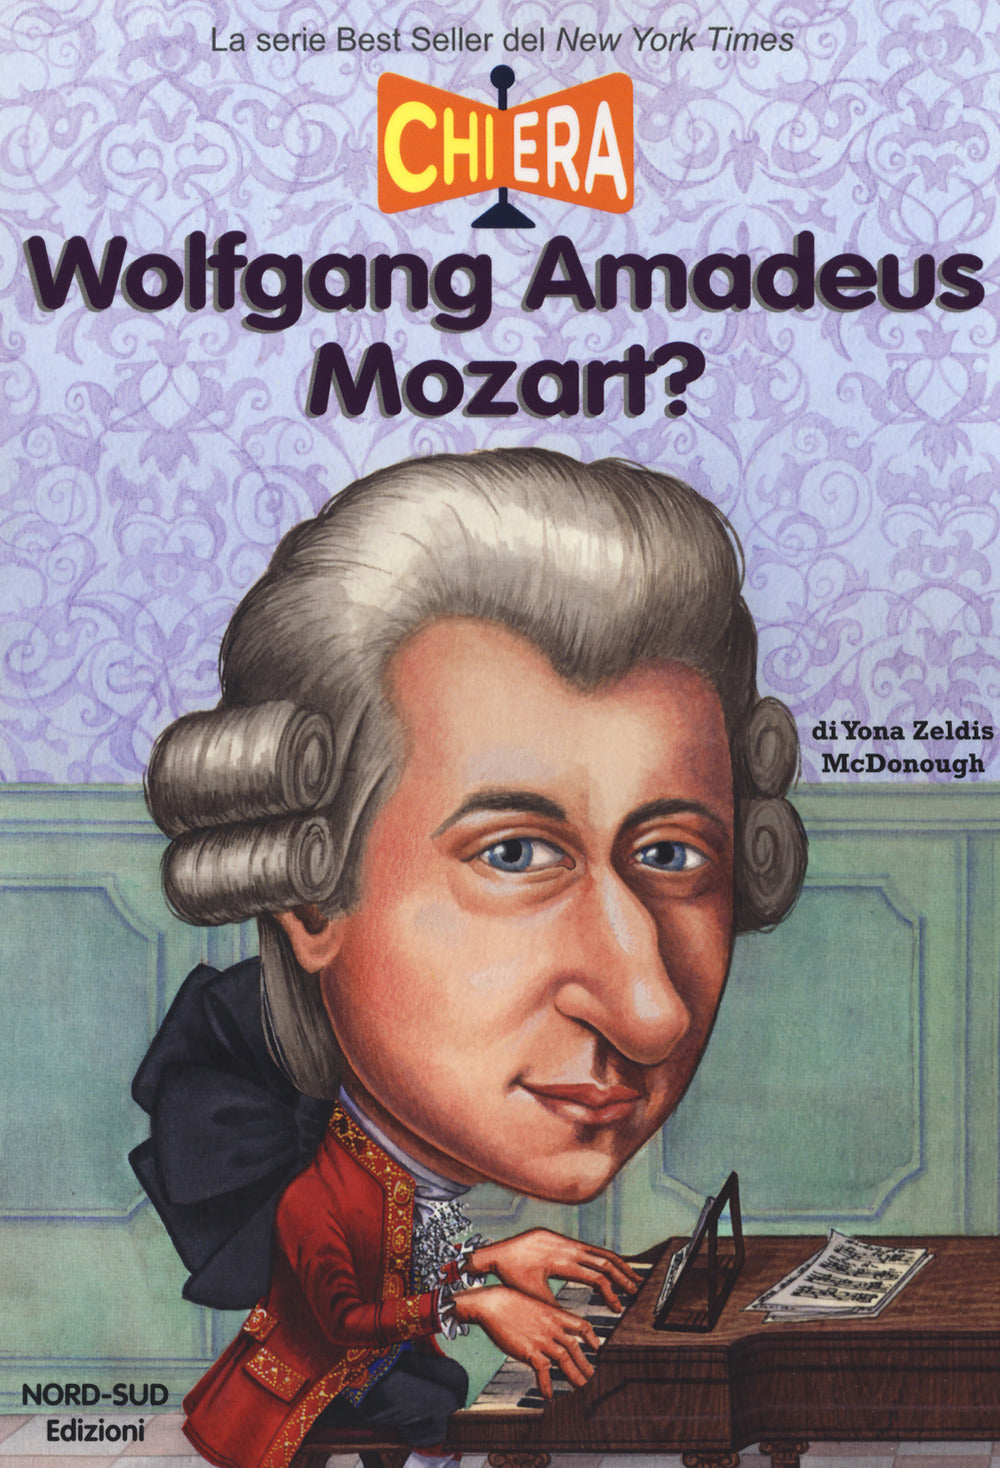 Chi era Wolfgang Amadeus Mozart?.